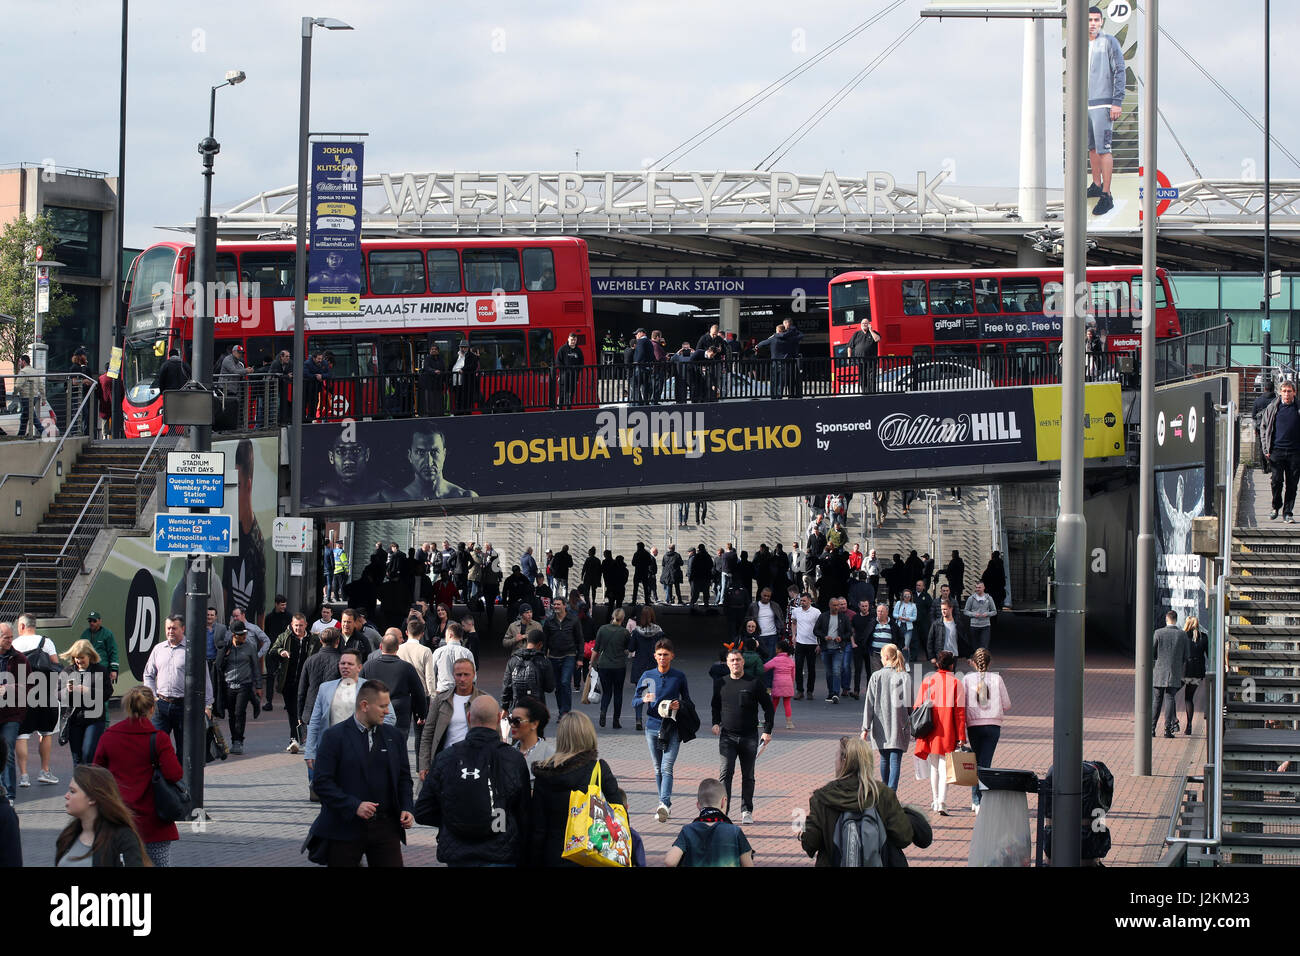 Signage promoting Joshua v Klitschko at Wembley Stadium, London. PRESS ASSOCIATION Photo. Picture date: Saturday April 29, 2017. See PA story BOXING London. Photo credit should read: Nick Potts/PA Wire Stock Photo